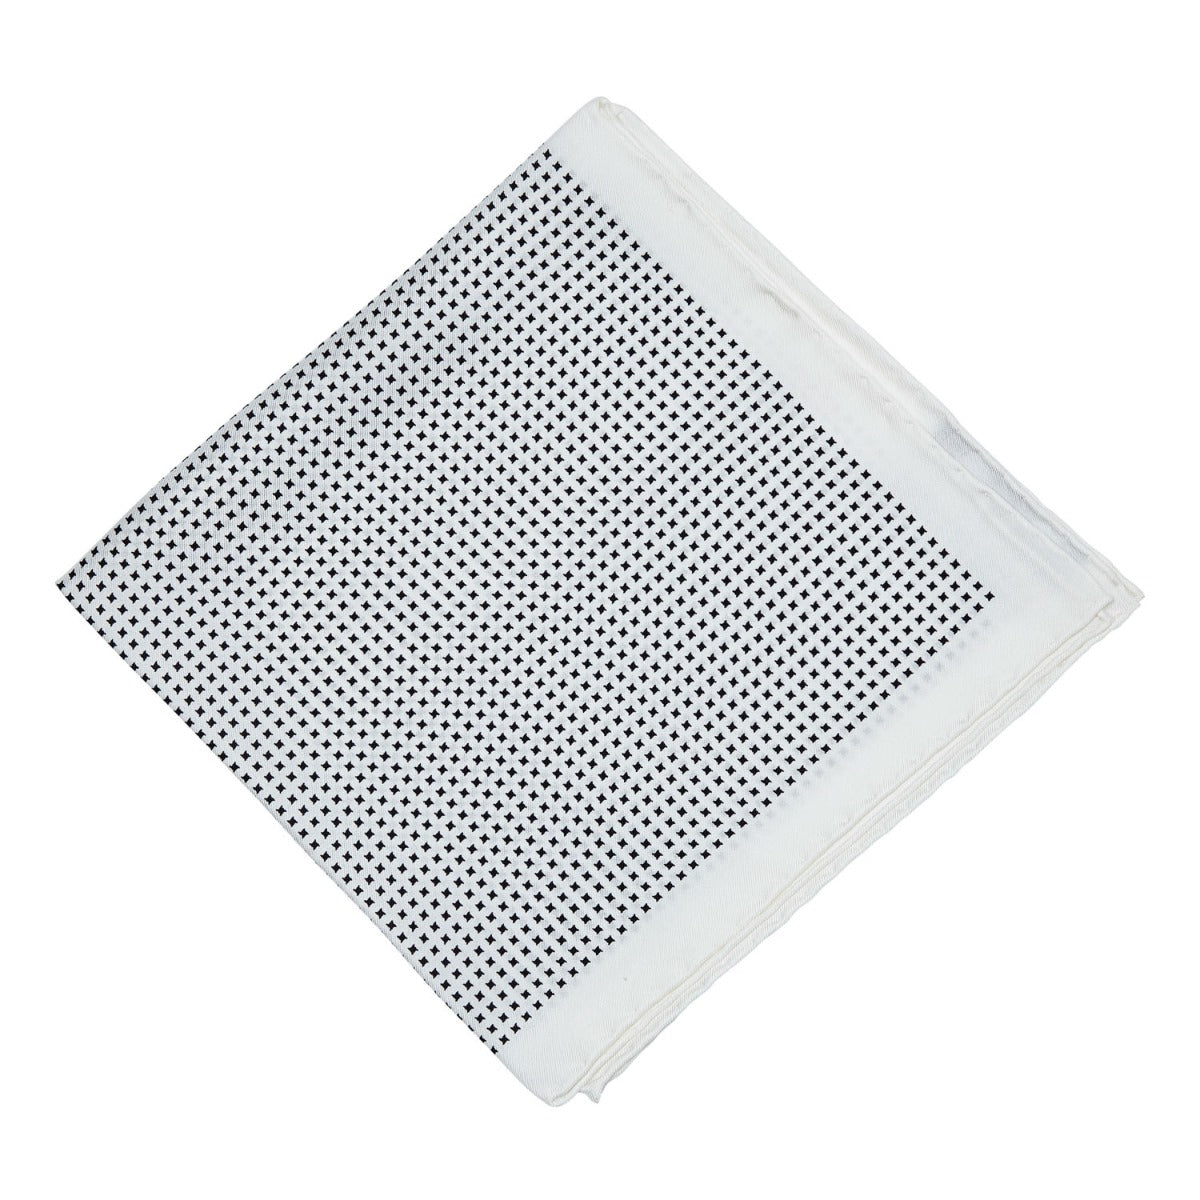 A formal Sovereign Grade 100% Silk White Repeating Black Star Pocket Square for a stylish KirbyAllison.com wardrobe.